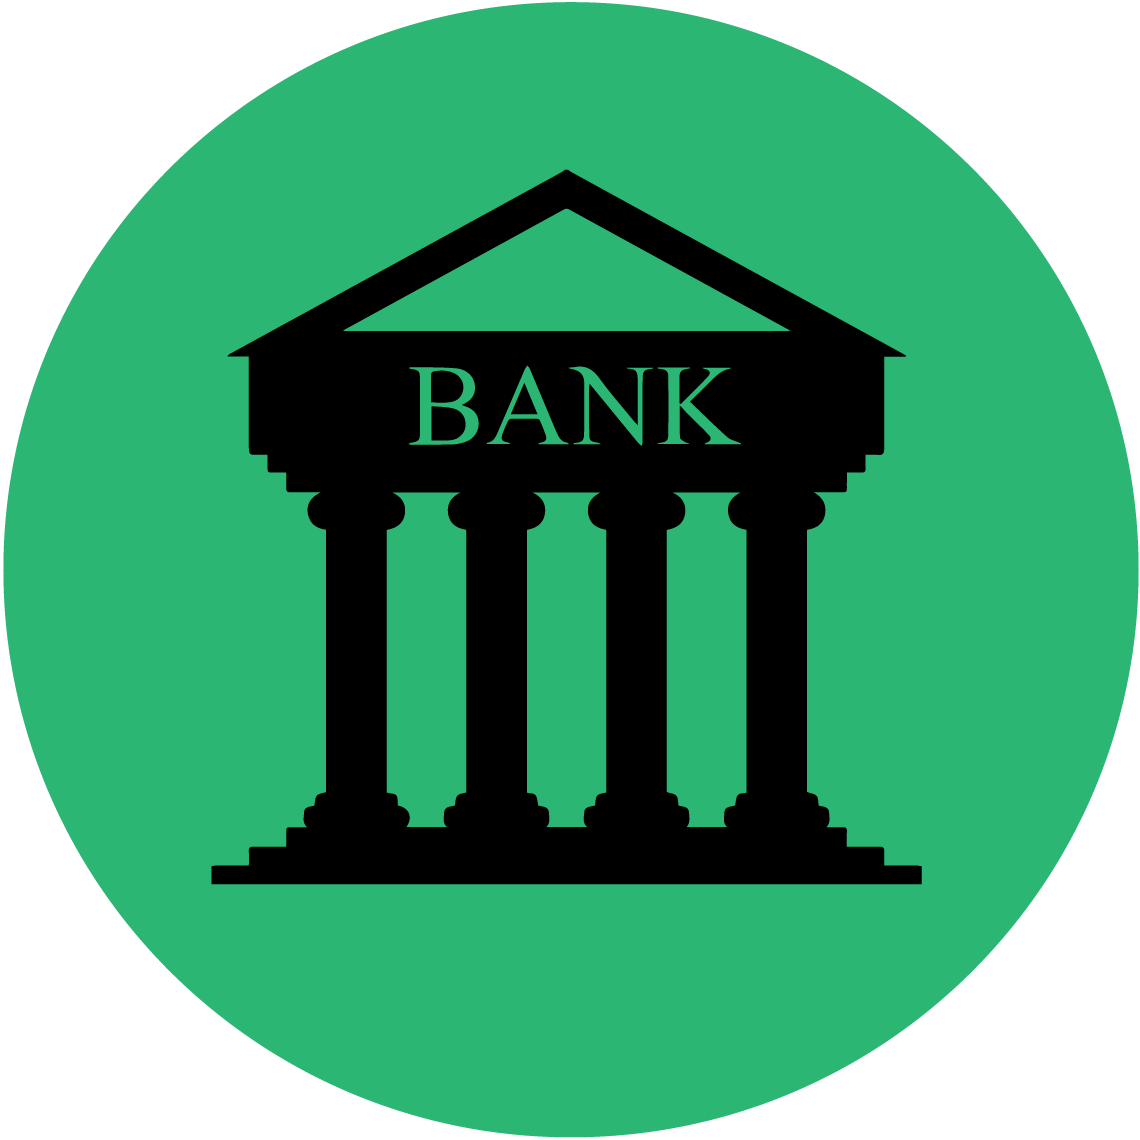 Банки логотипы png. Банки логотипы. Значок банка. Банк лого. Банк пиктограмма.